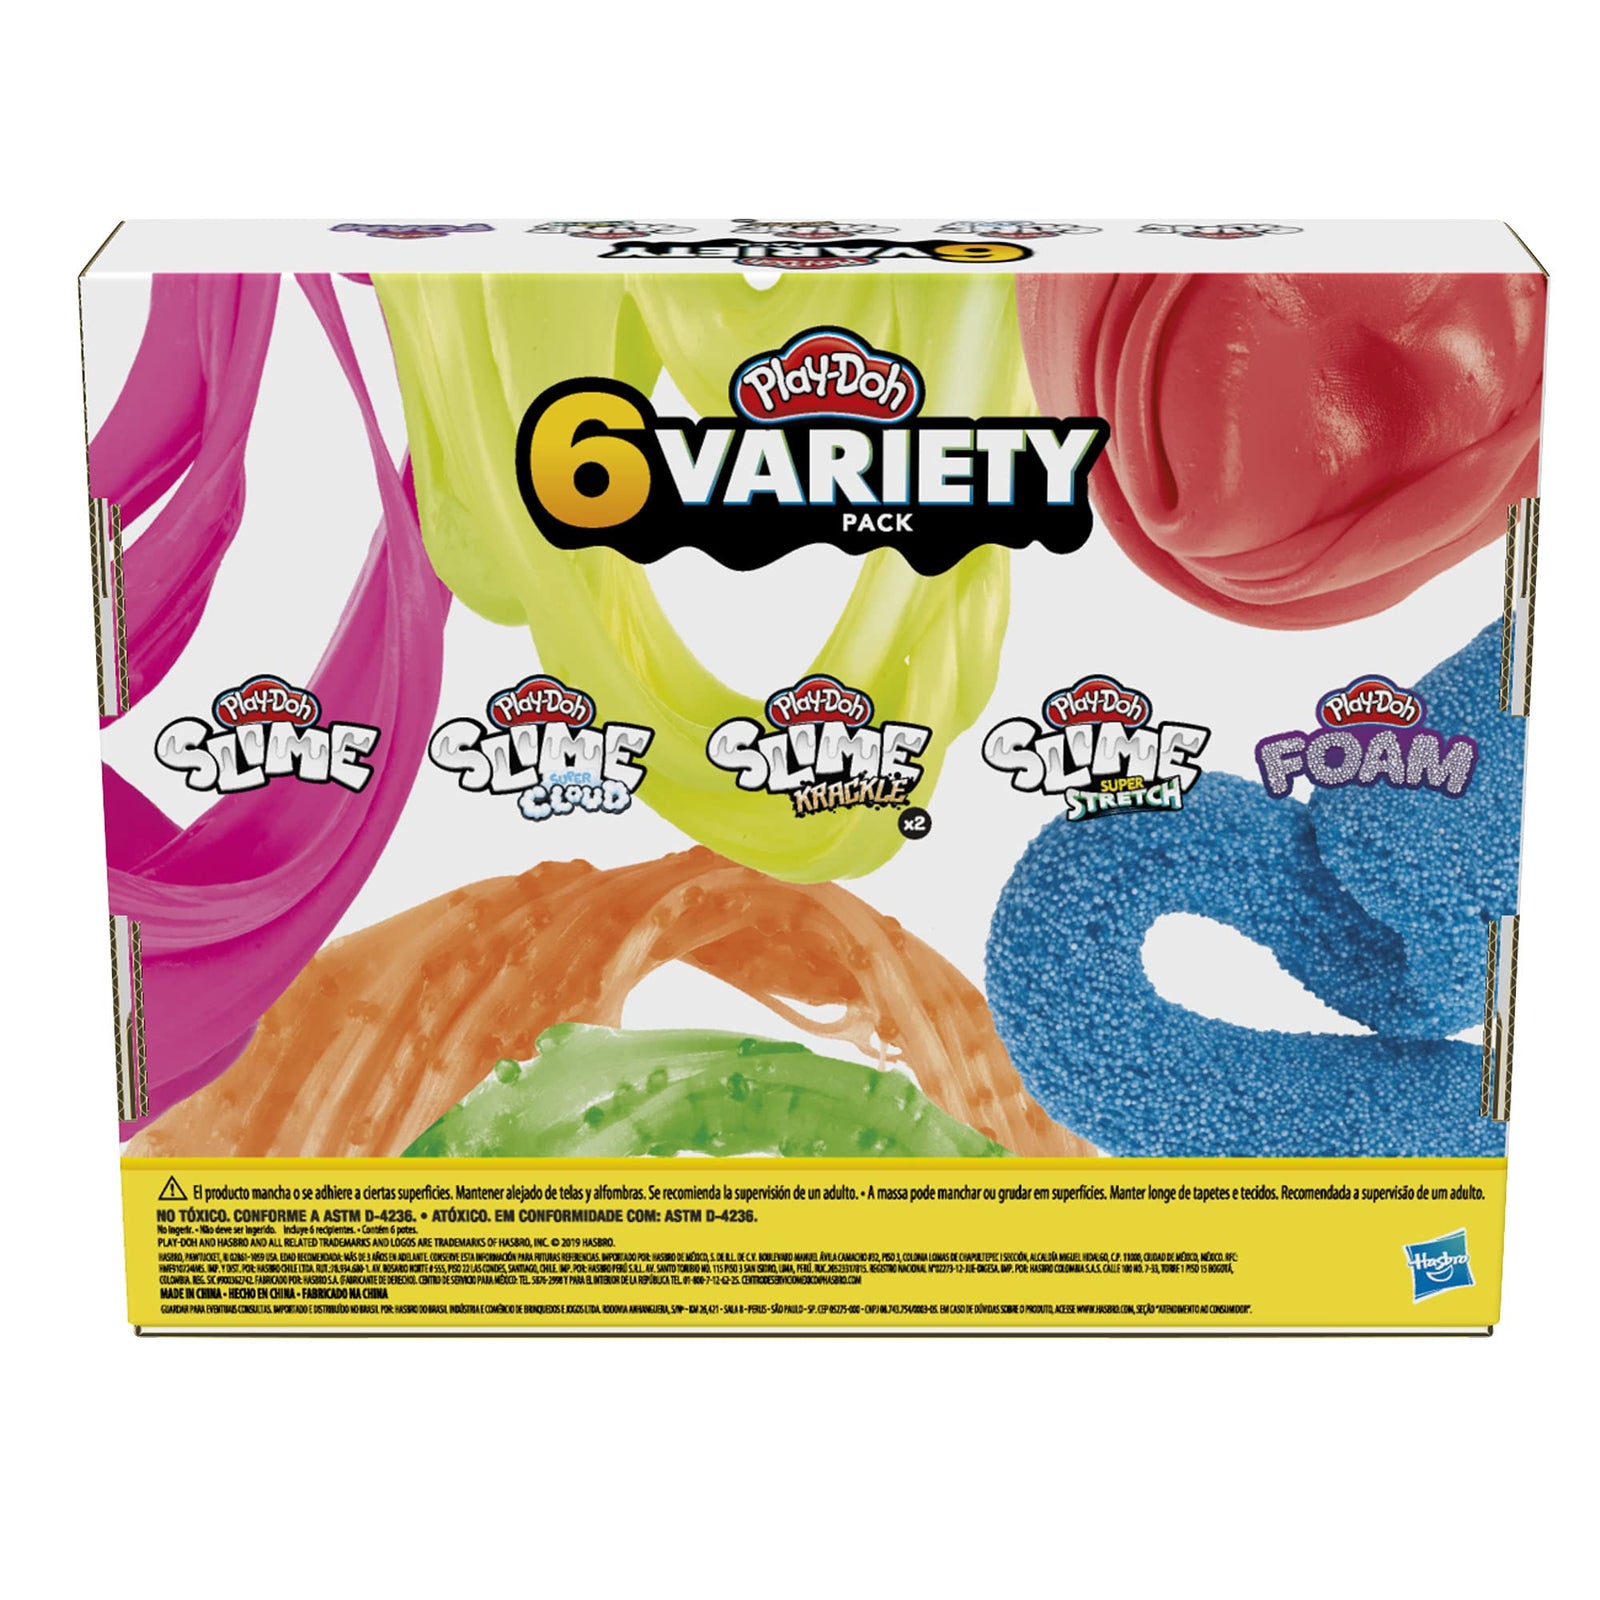 Play-Doh Compound Corner Variety 6 Pack - Slime, Cloud, Krackle, Stretch, Foam